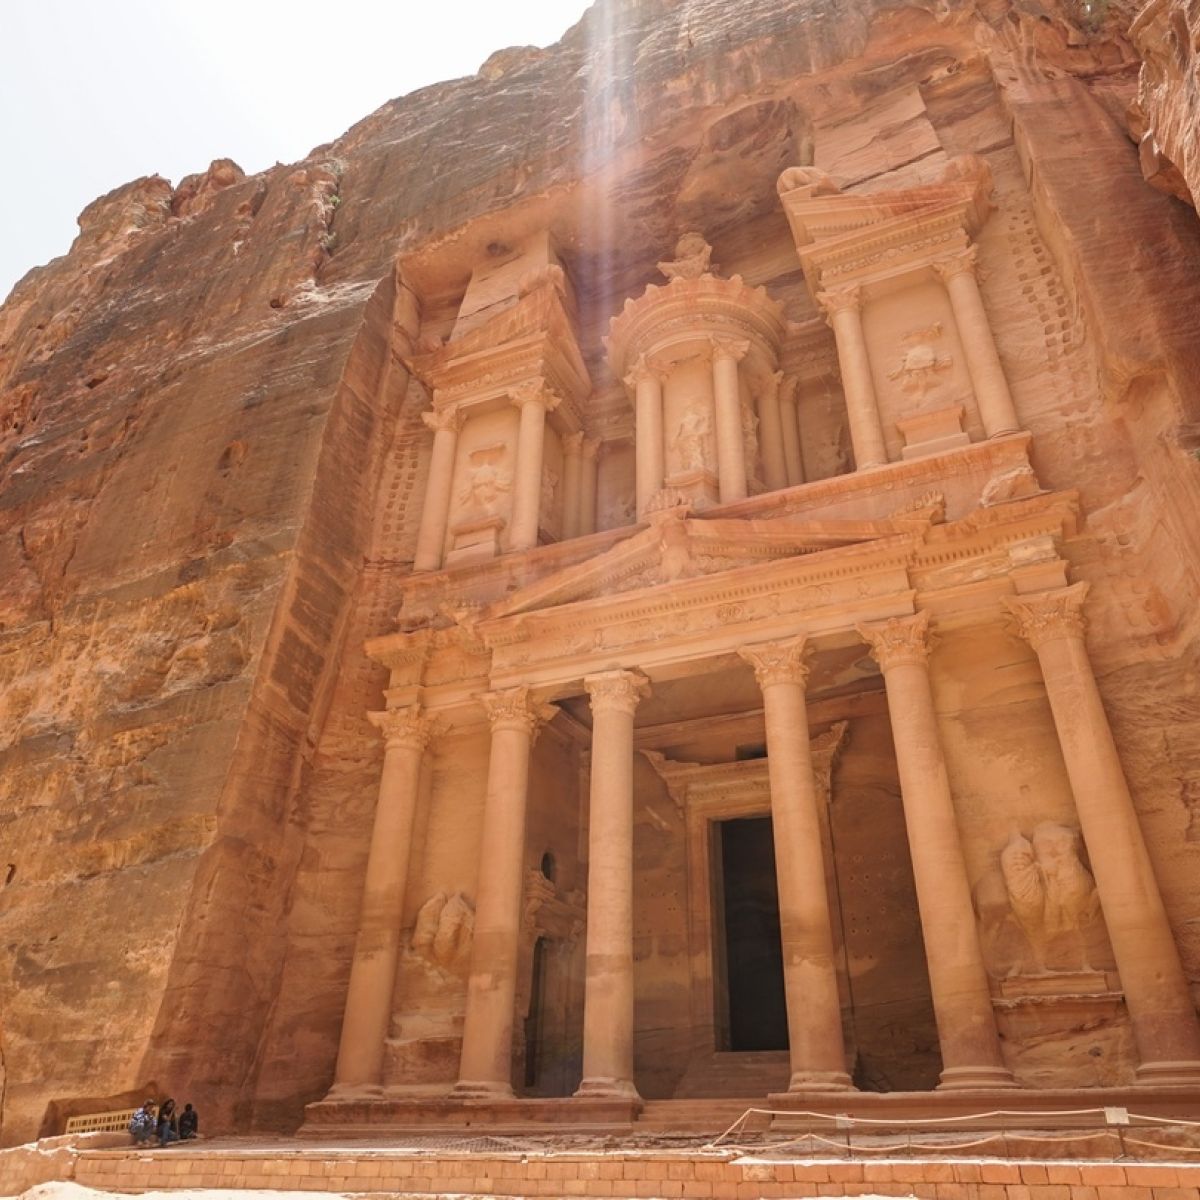 Buried monument found at Petra, Jordan